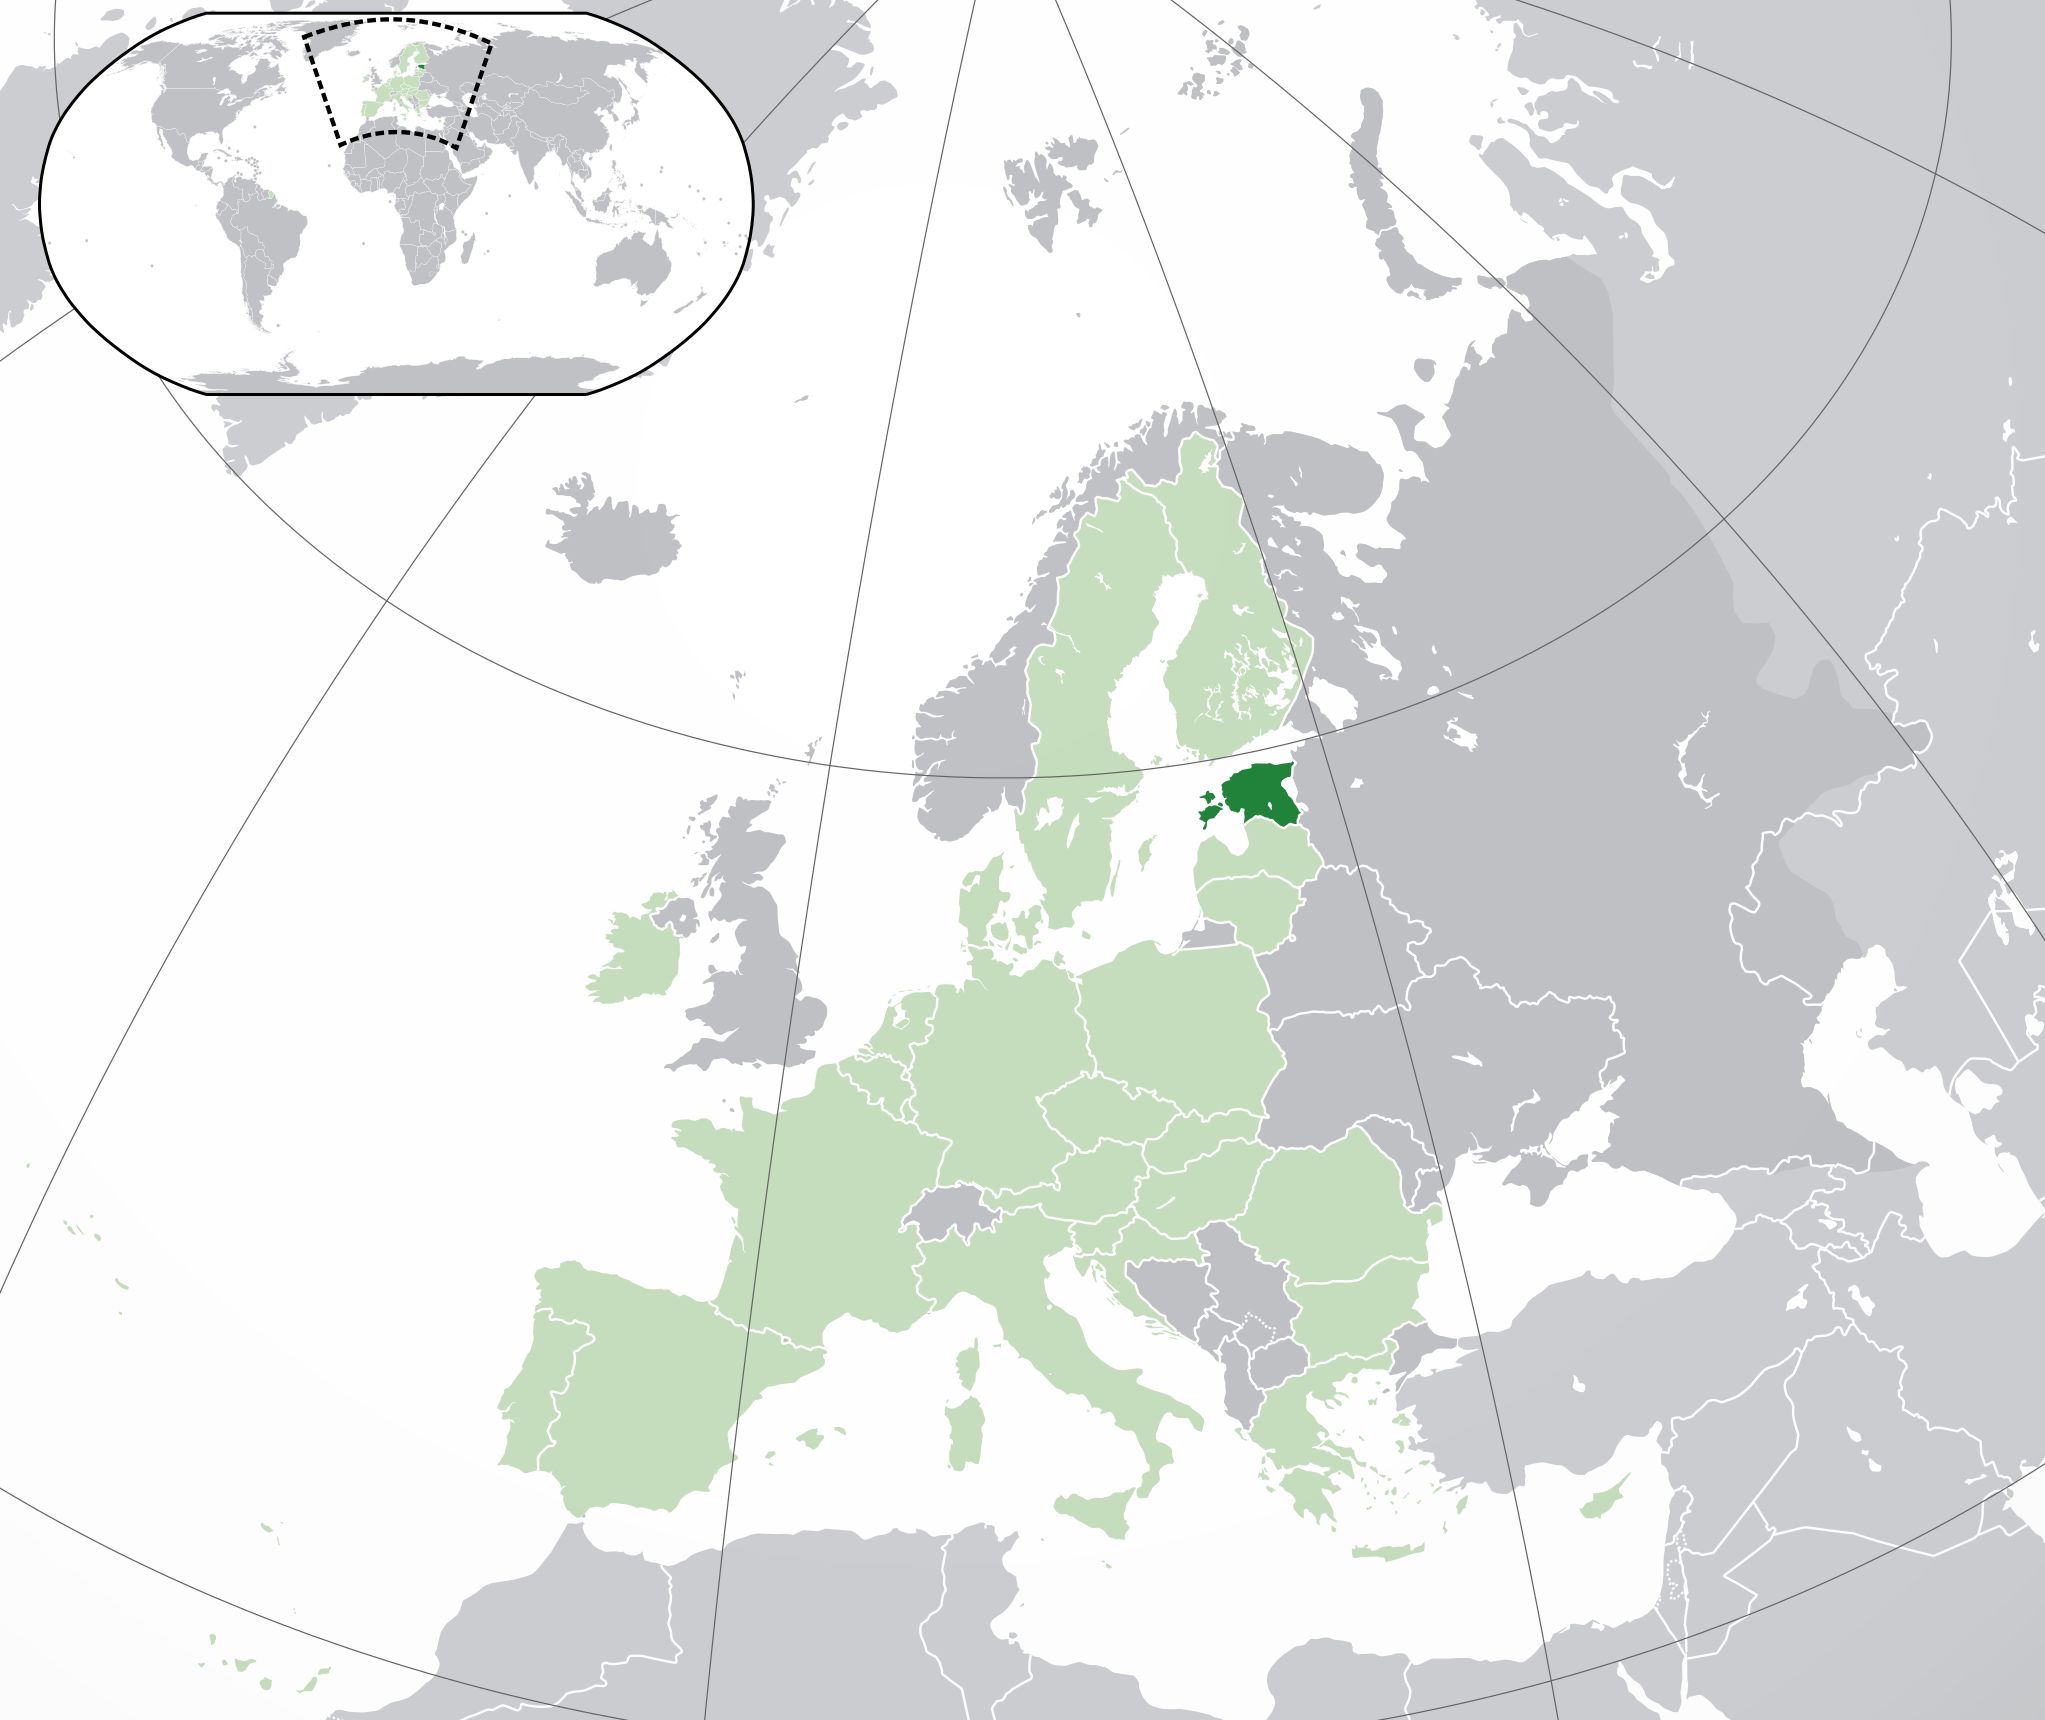 Estonia (dark green) in the European Union (light green)